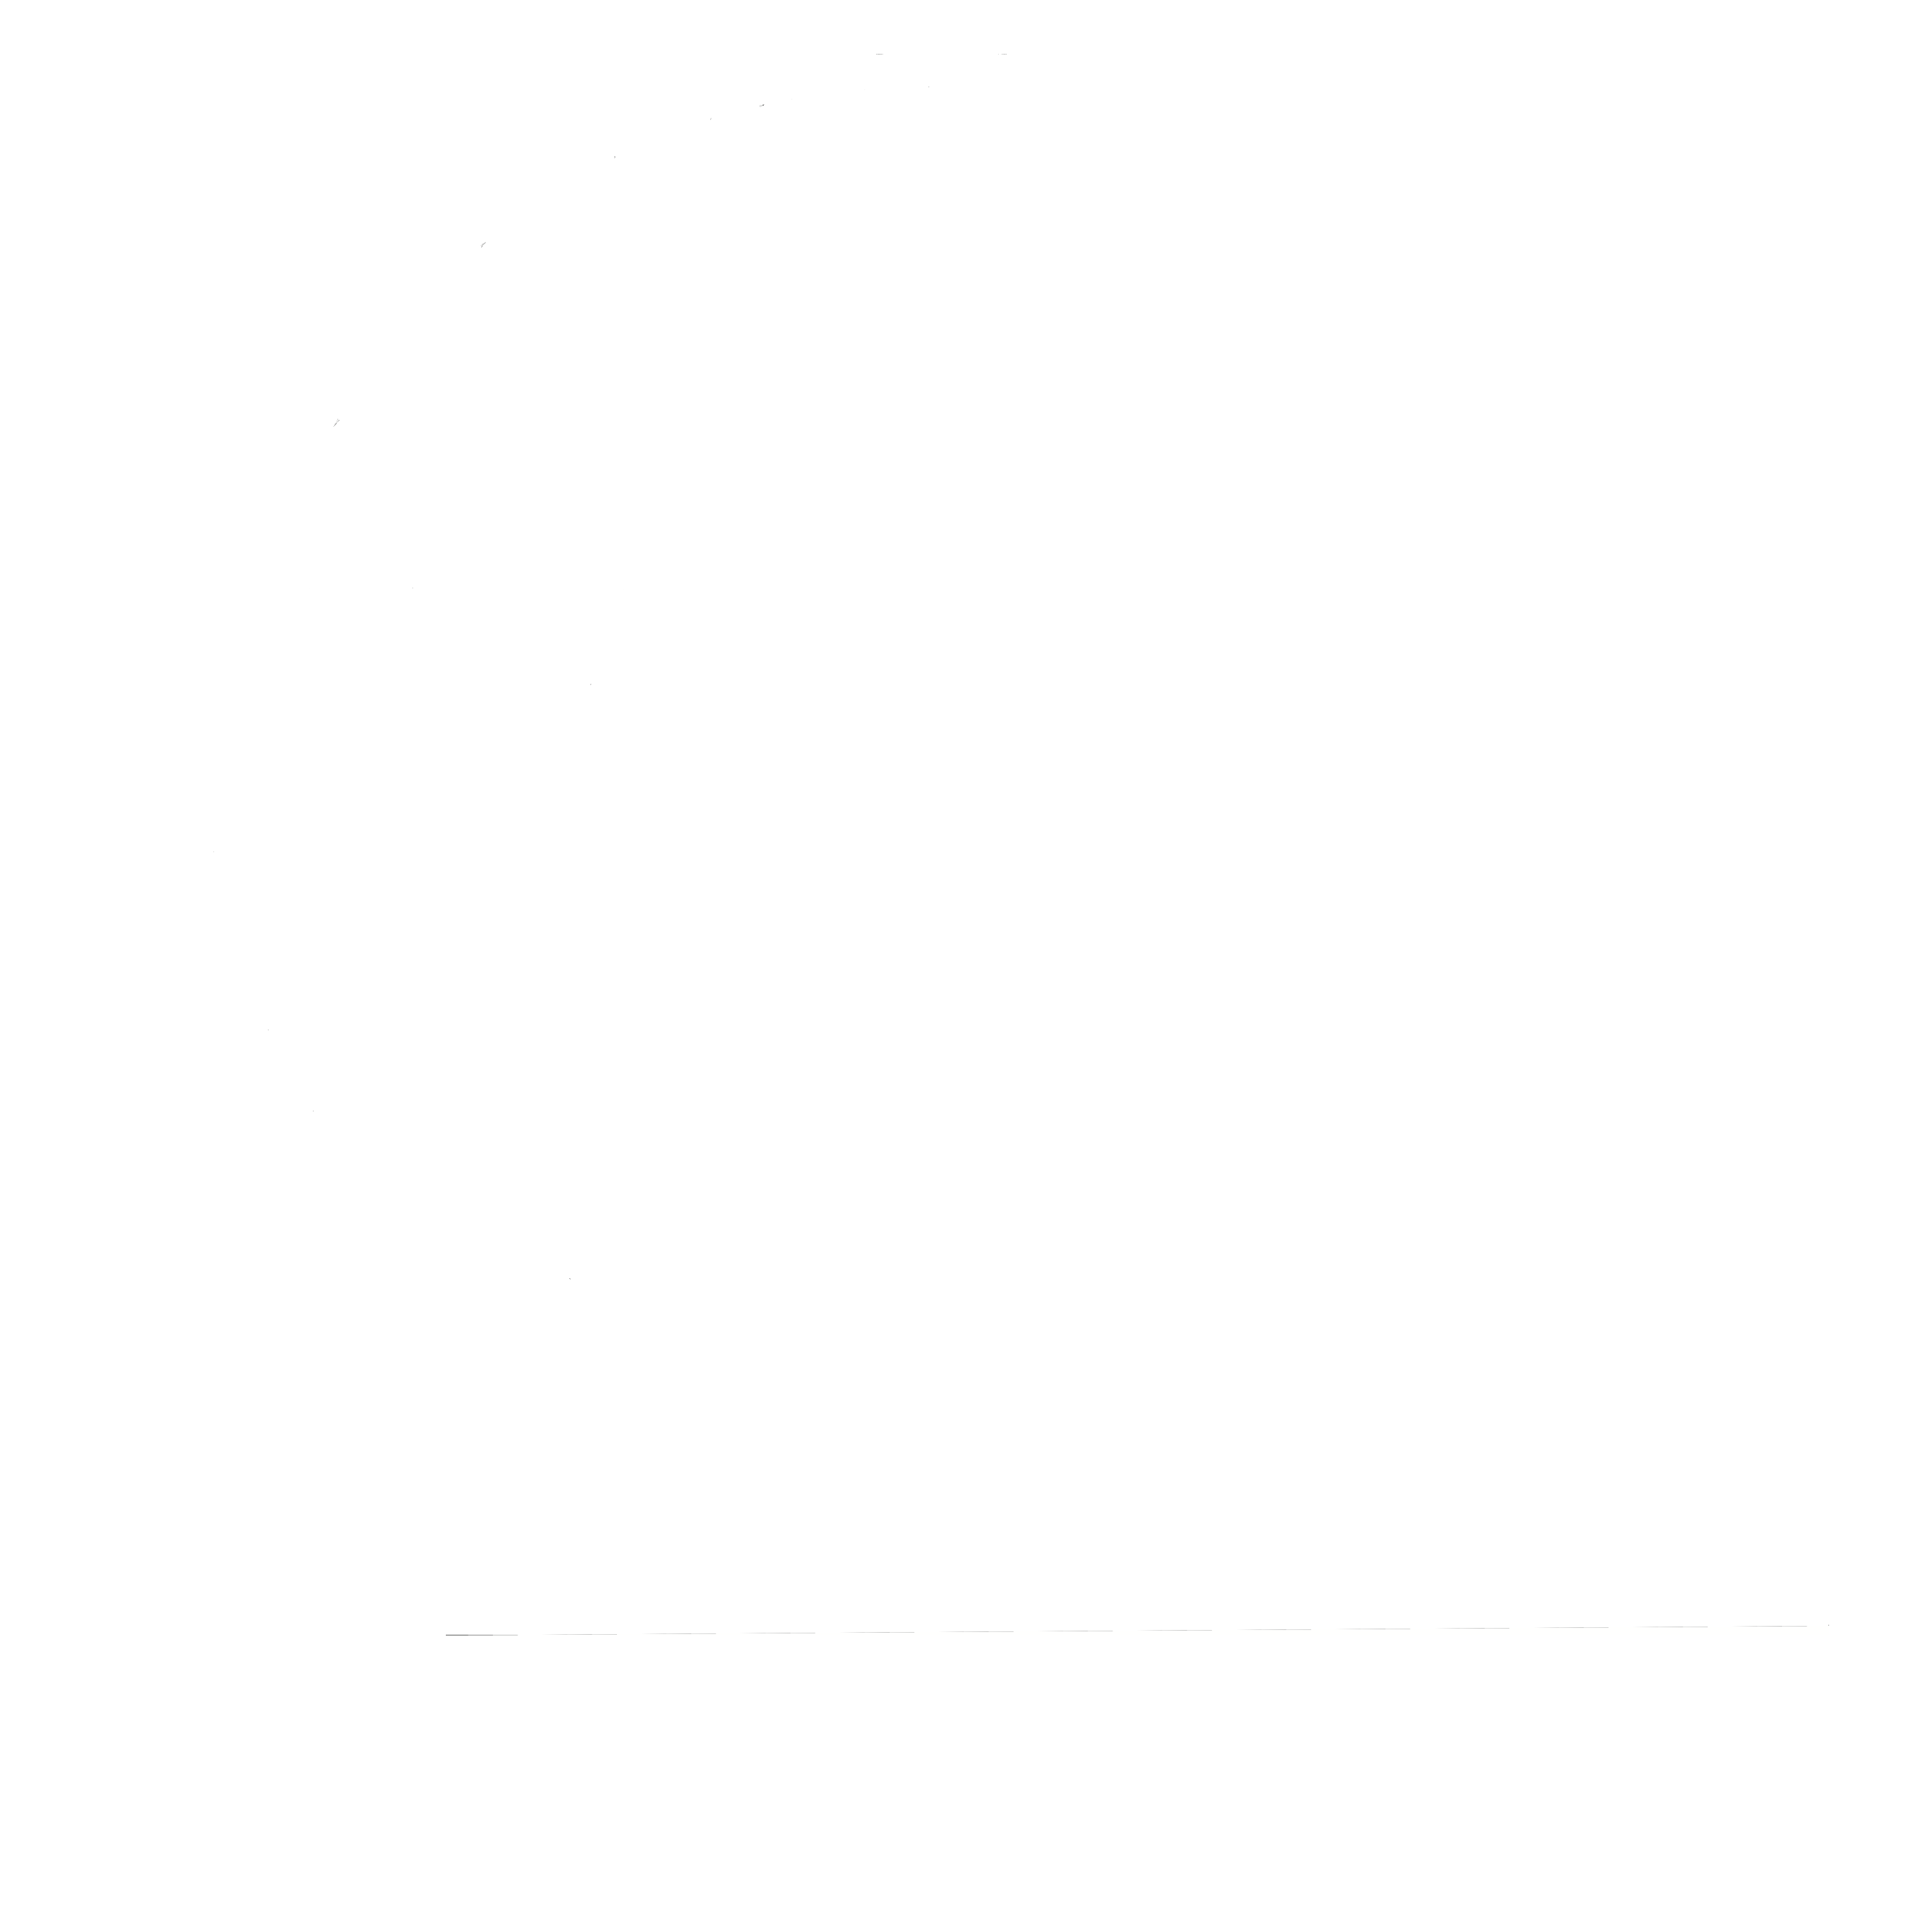 Hair Salon SHAREL